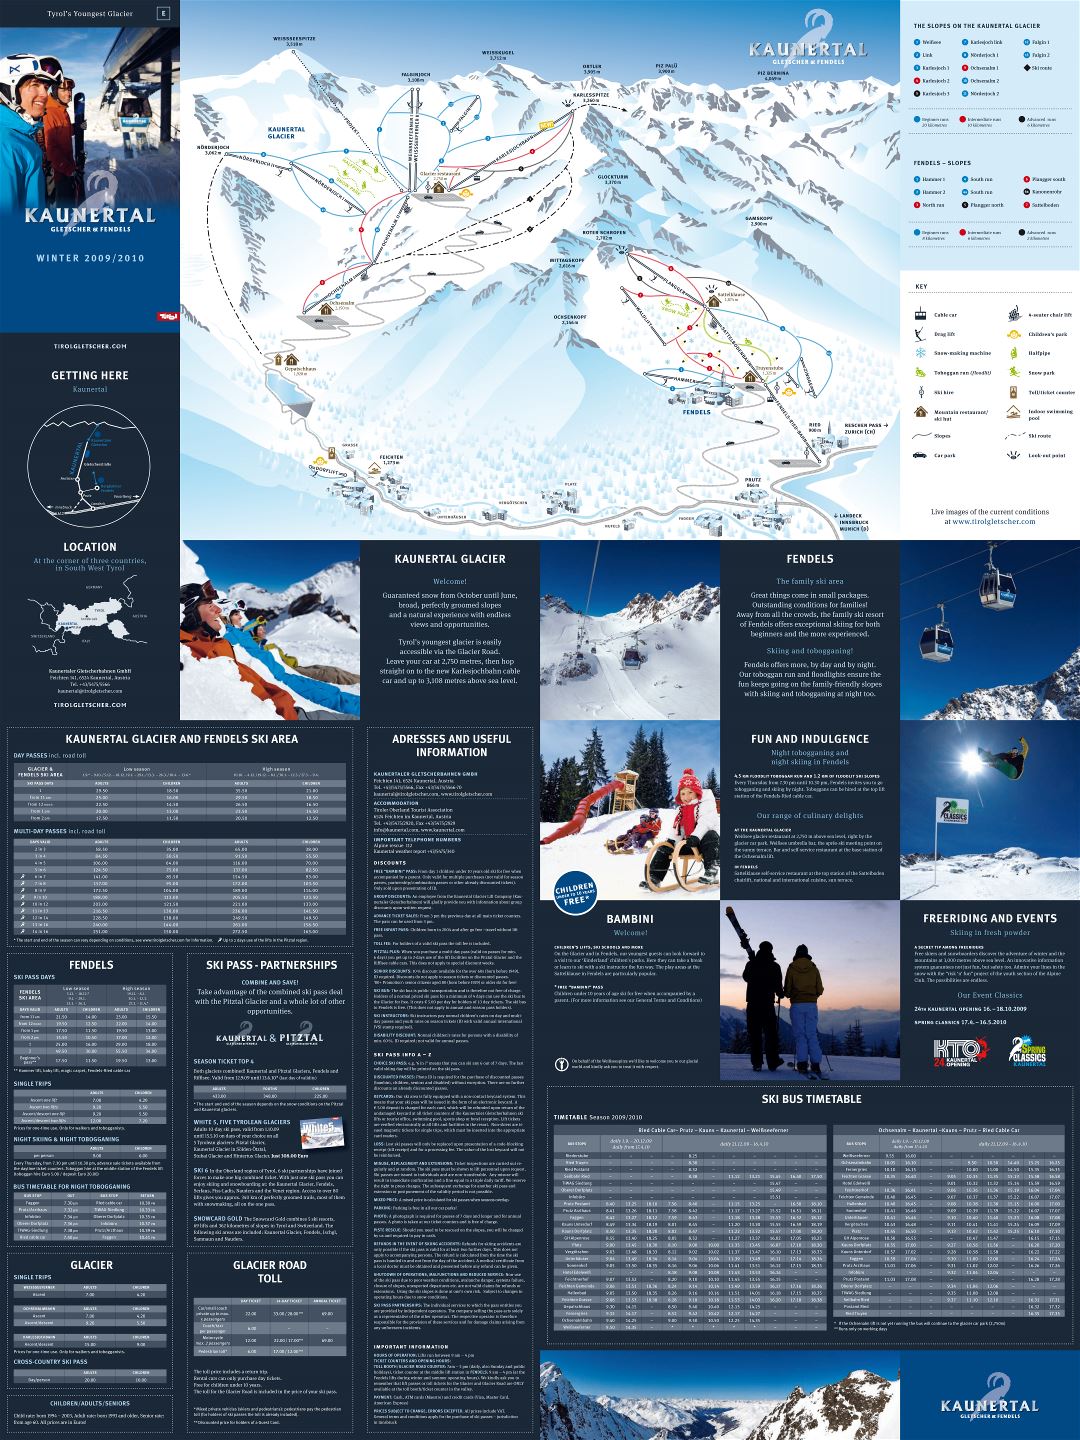 Large scale Gletscher - Fendels, Kaunertal Ski Resort guide - 2009